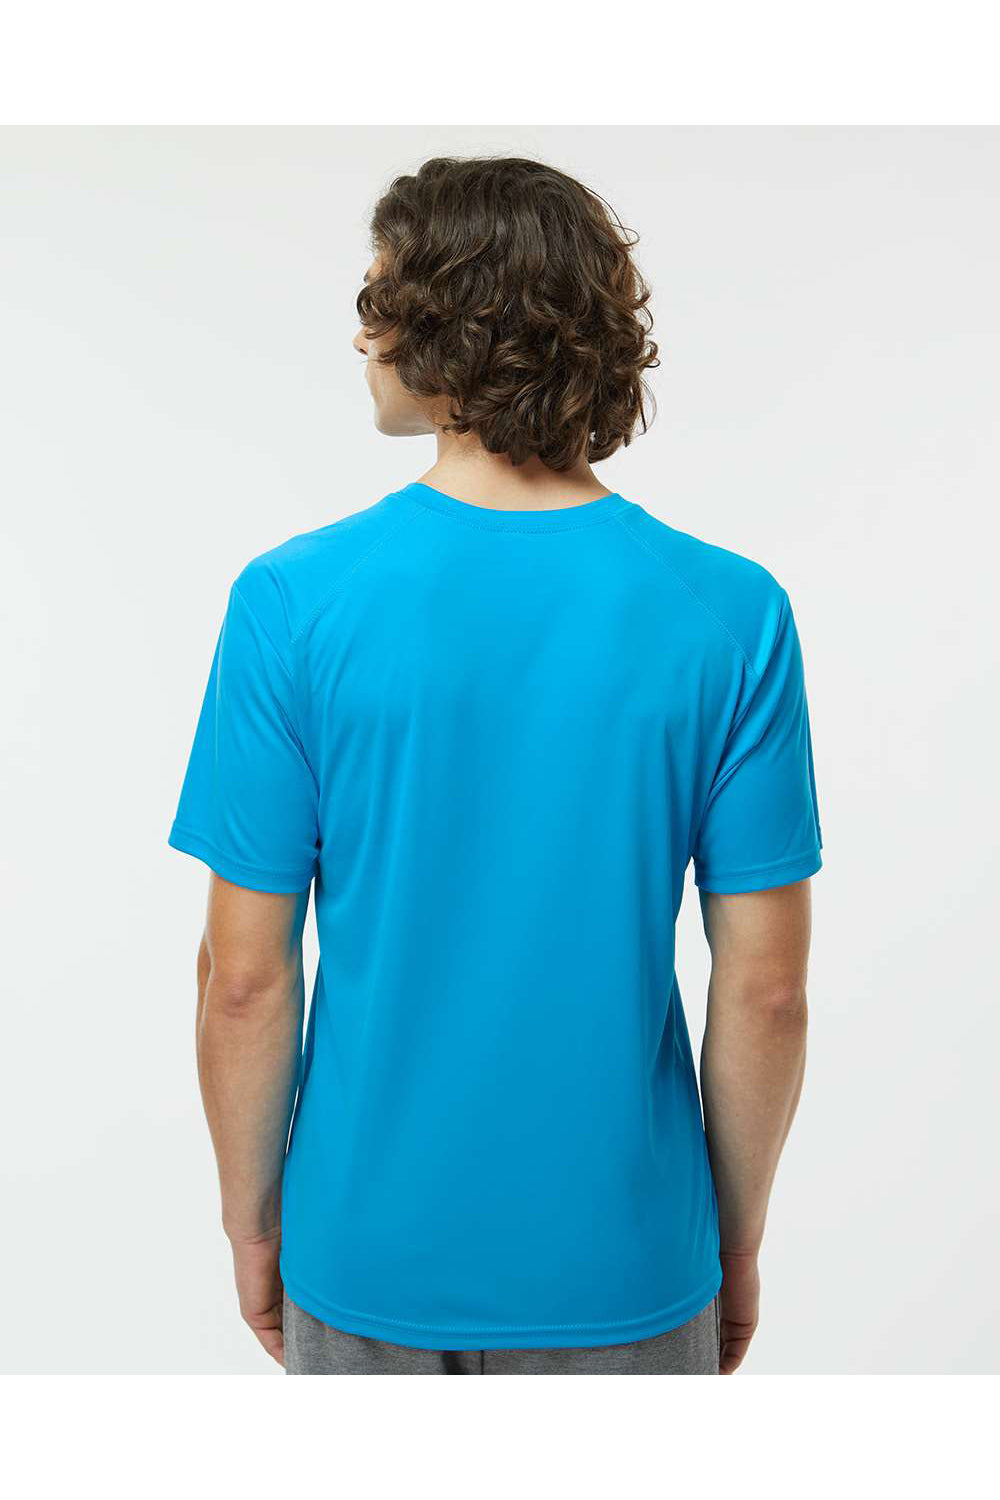 Paragon 200 Mens Islander Performance Short Sleeve Crewneck T-Shirt Turquoise Blue Model Back